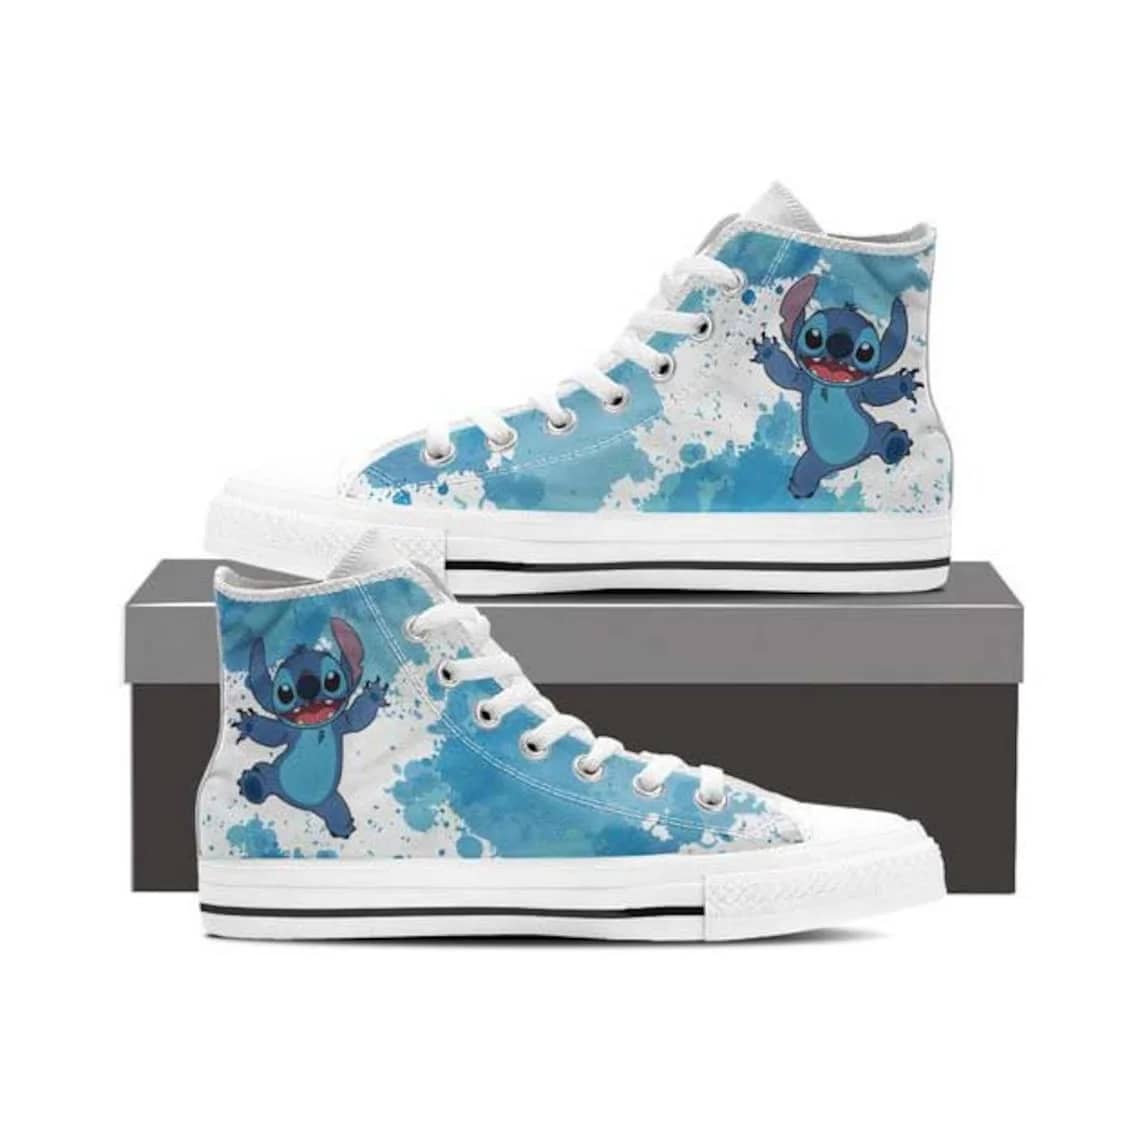 Stitch Style 2 Amazon Custom Disney High Top Shoes